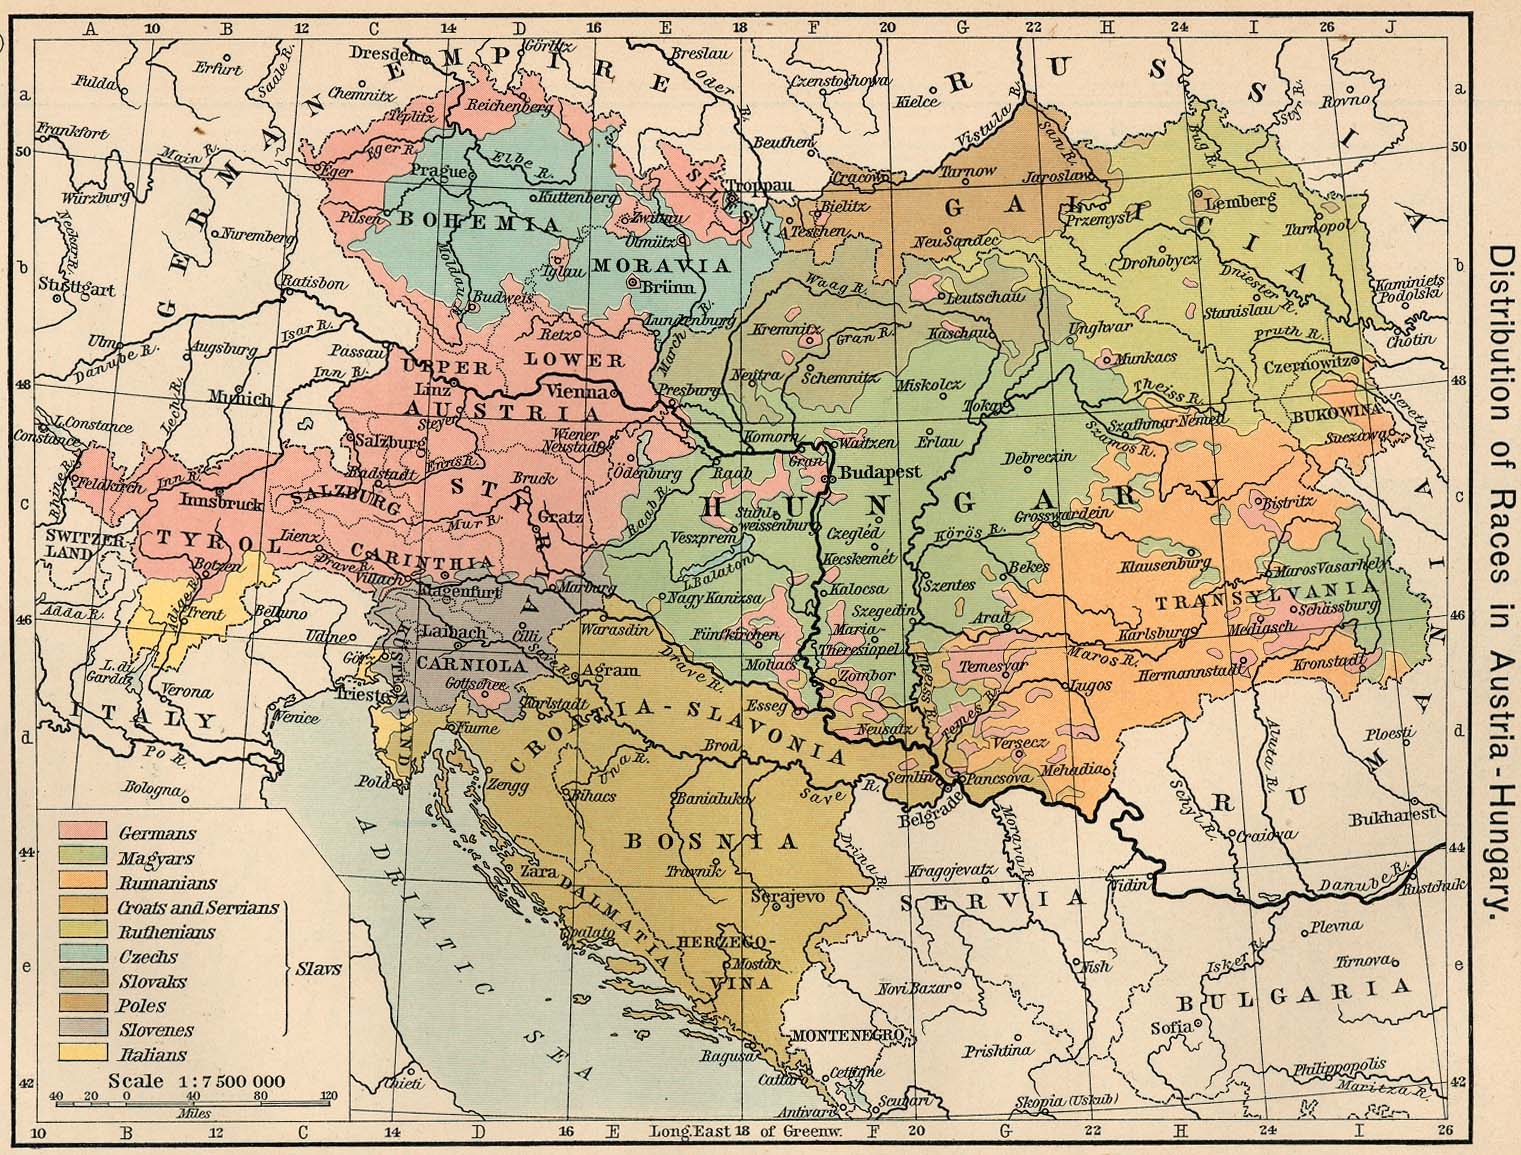 Доклад по теме Революция 1848-1849 гг. в Австрийской империи. Австрийская империя накануне революции